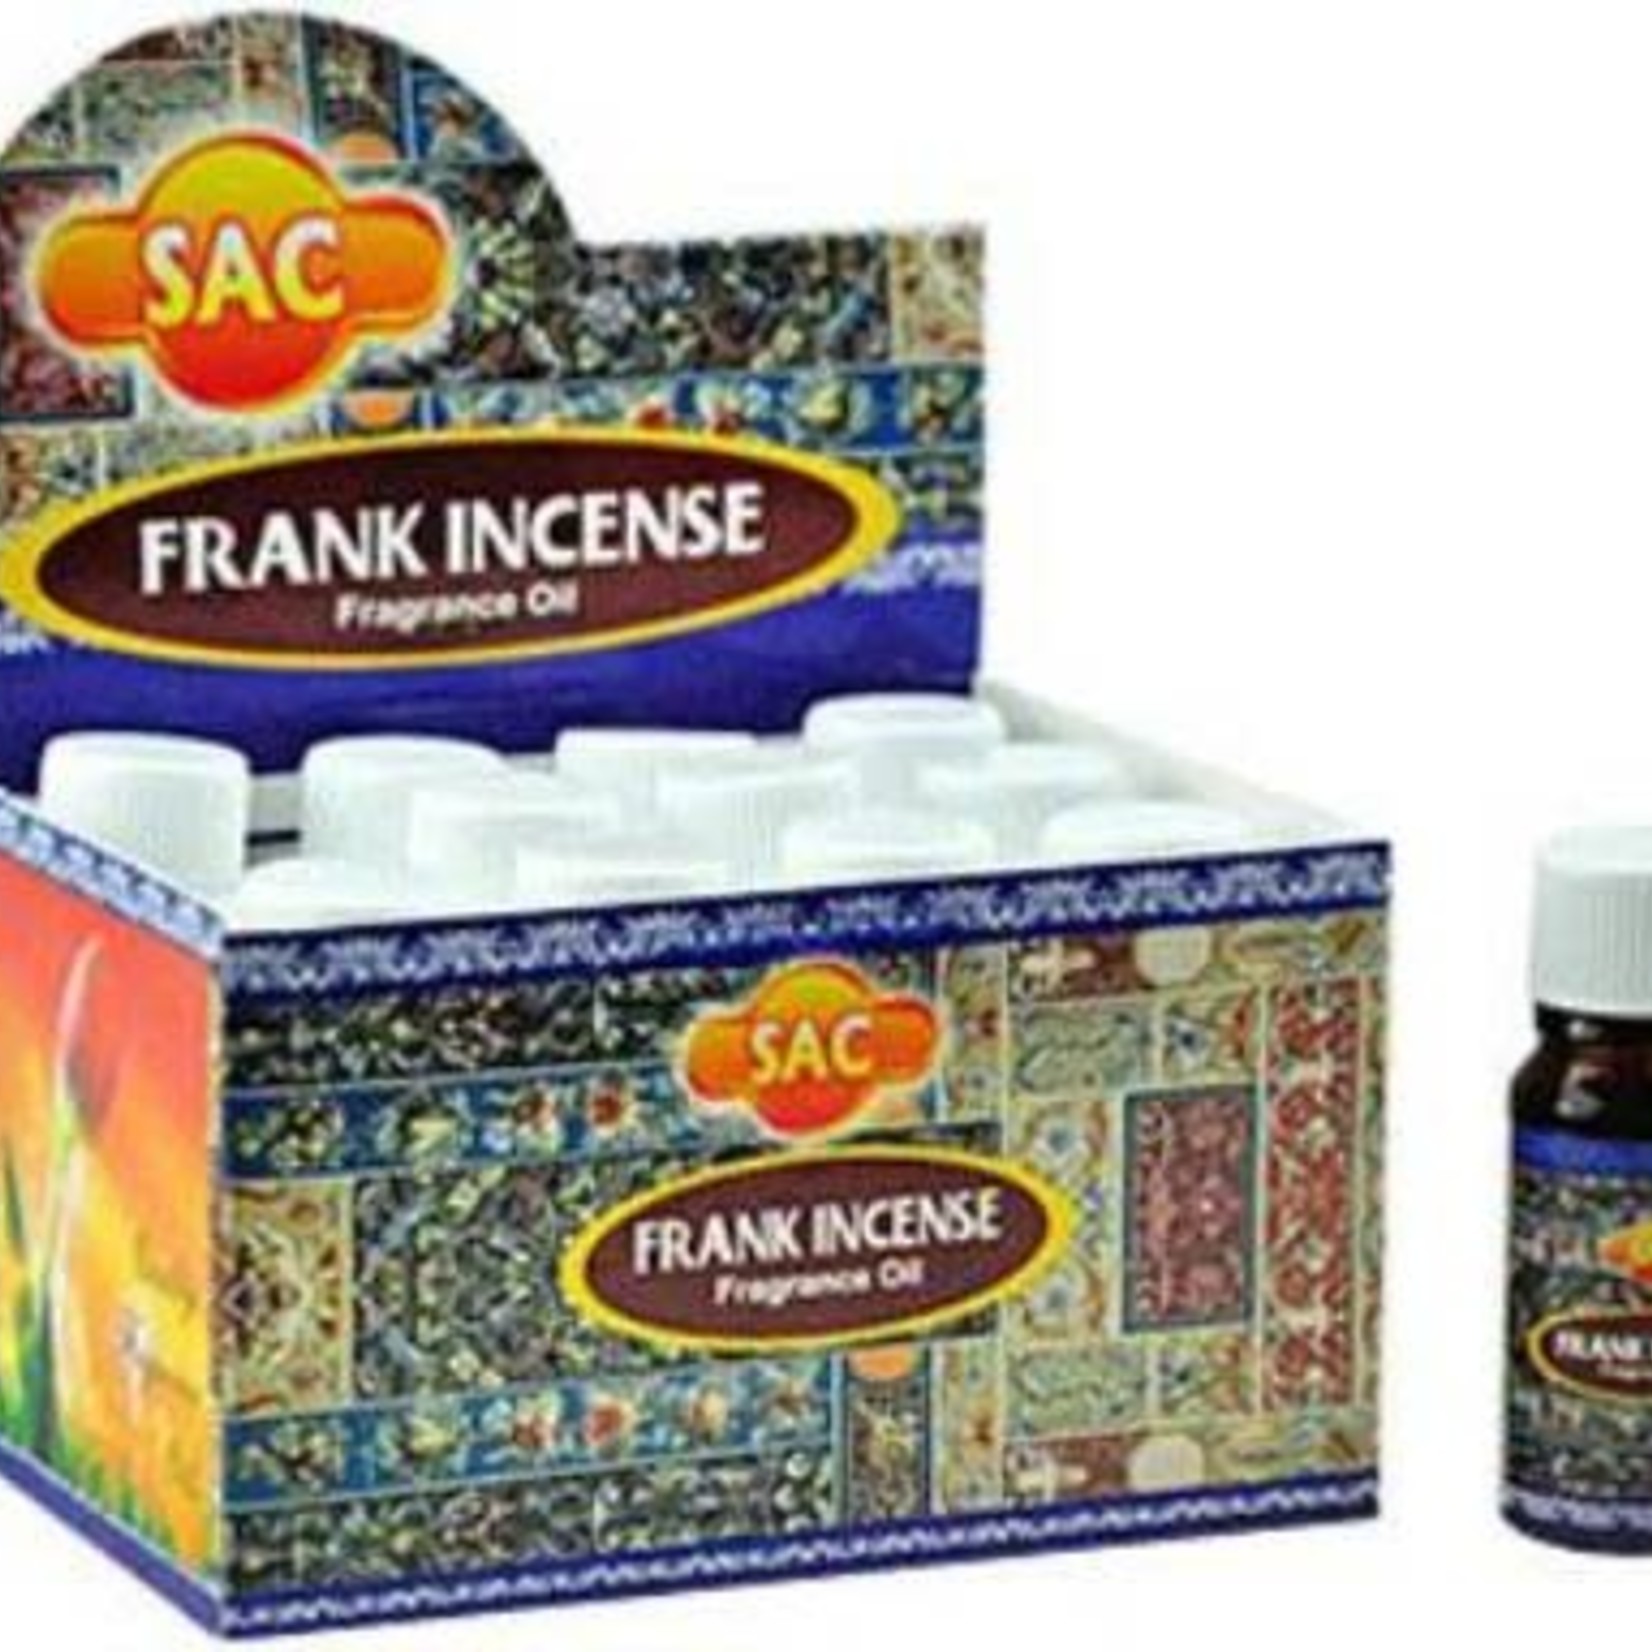 SAC Frankincense Fragrance Oil - SAC